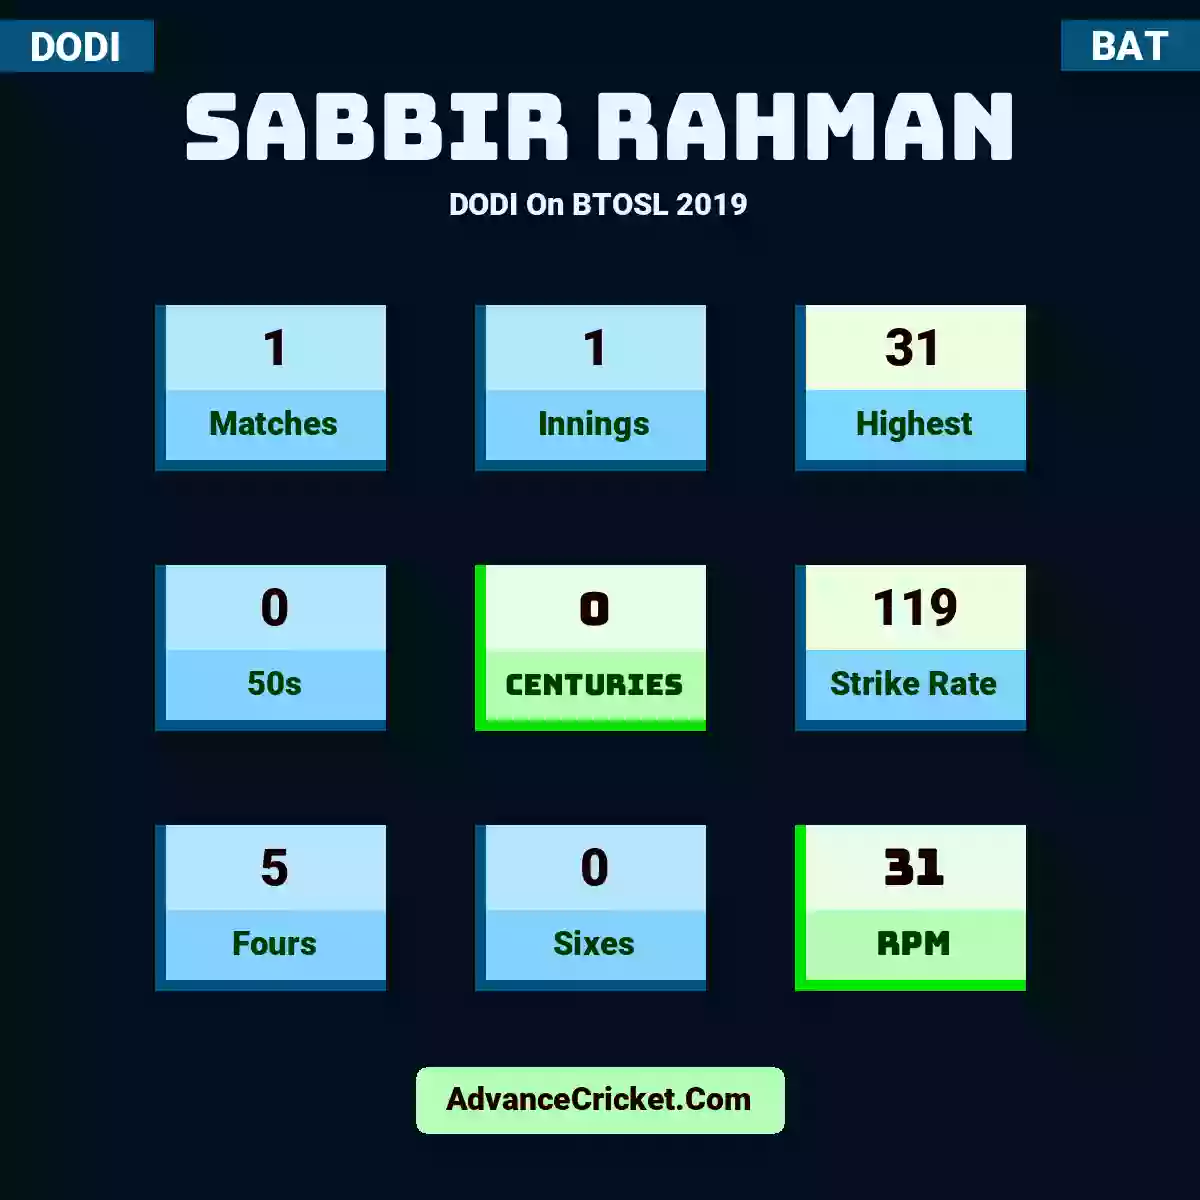 Sabbir Rahman DODI  On BTOSL 2019, Sabbir Rahman played 1 matches, scored 31 runs as highest, 0 half-centuries, and 0 centuries, with a strike rate of 119. S.Rahman hit 5 fours and 0 sixes, with an RPM of 31.